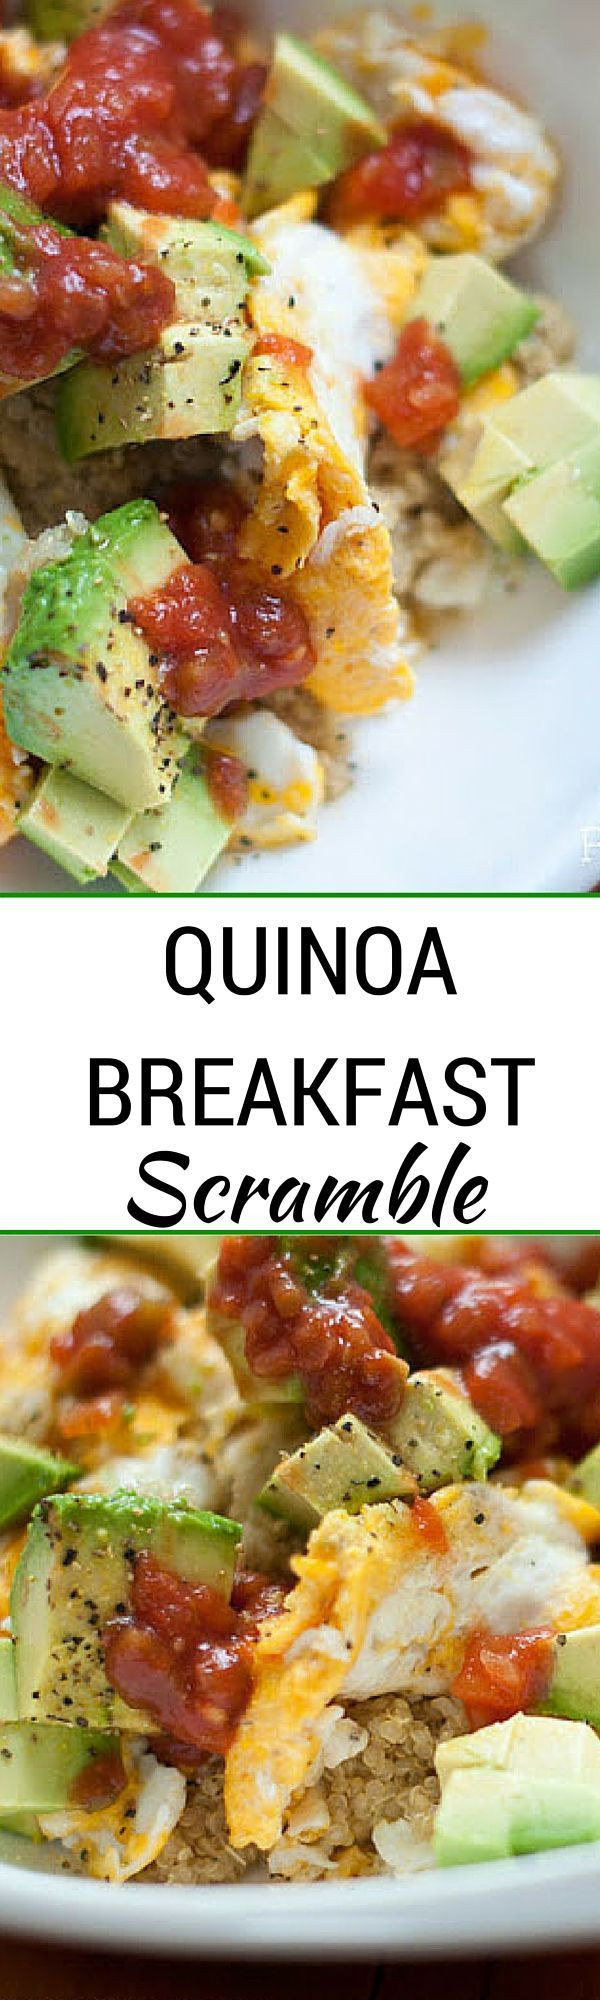 Clean Eating Breakfast Recipes
 Quinoa Breakfast Scramble Recipe